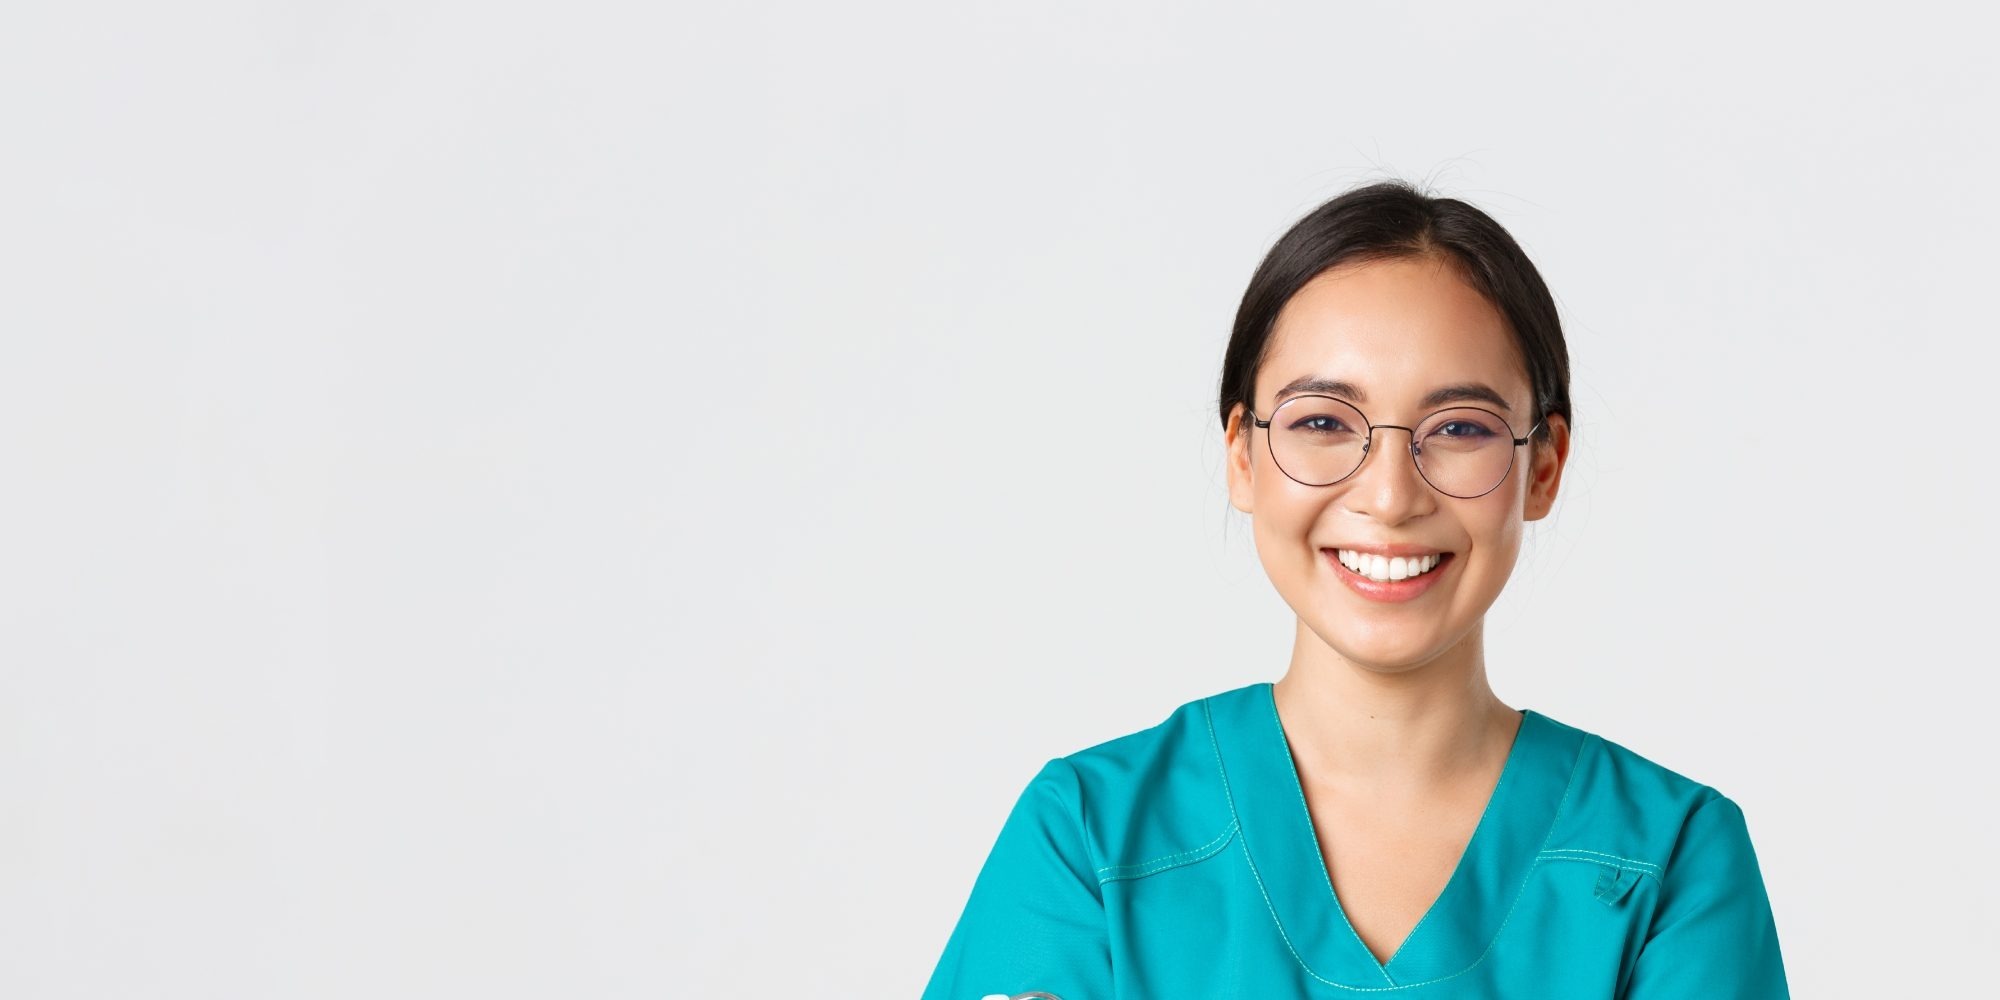 Healthcare worker in scrubs smiling